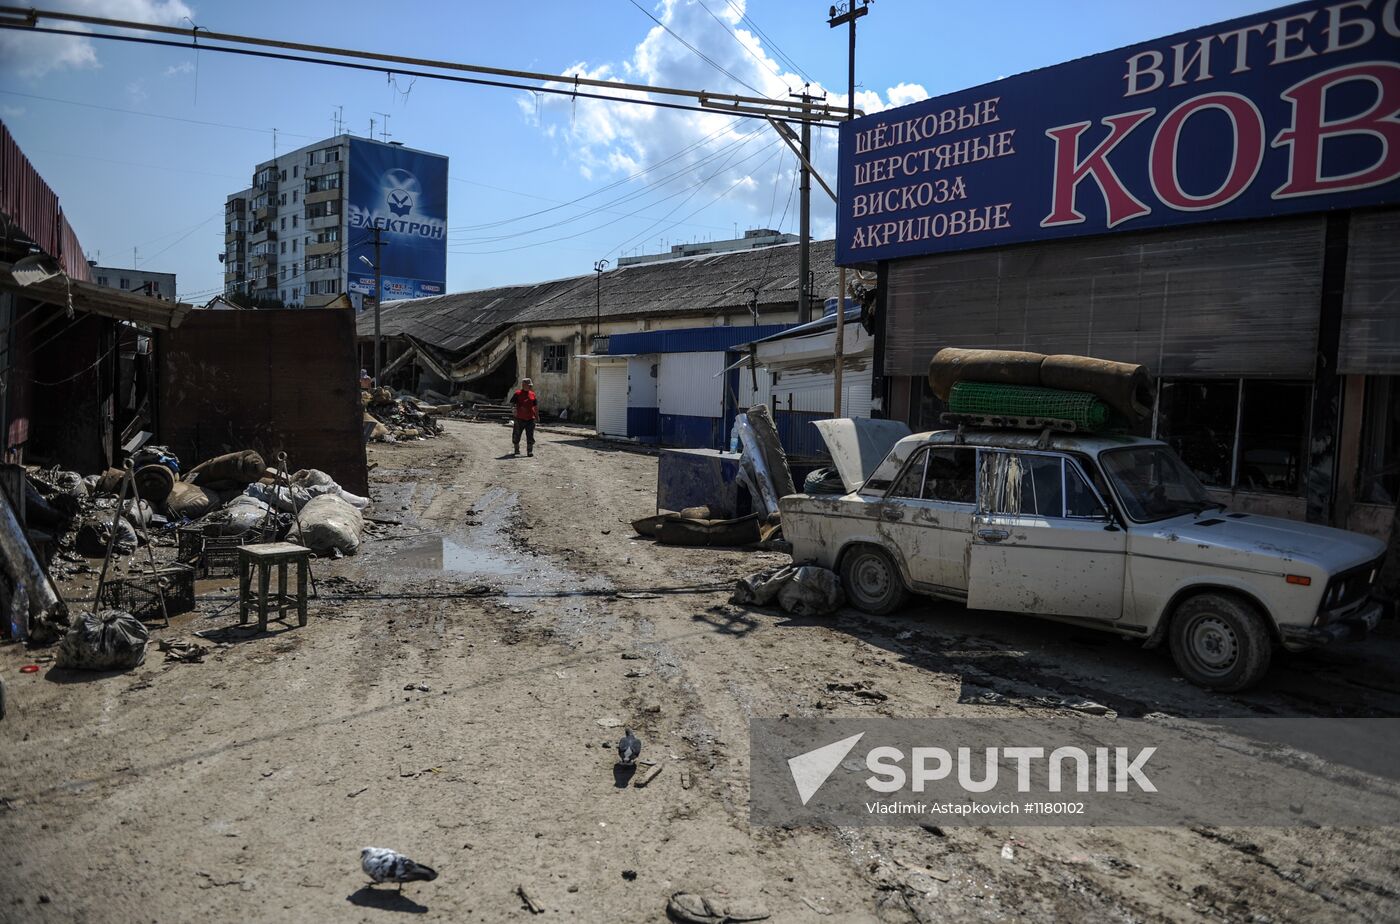 Aftermath of flood in Krasnodar Territory